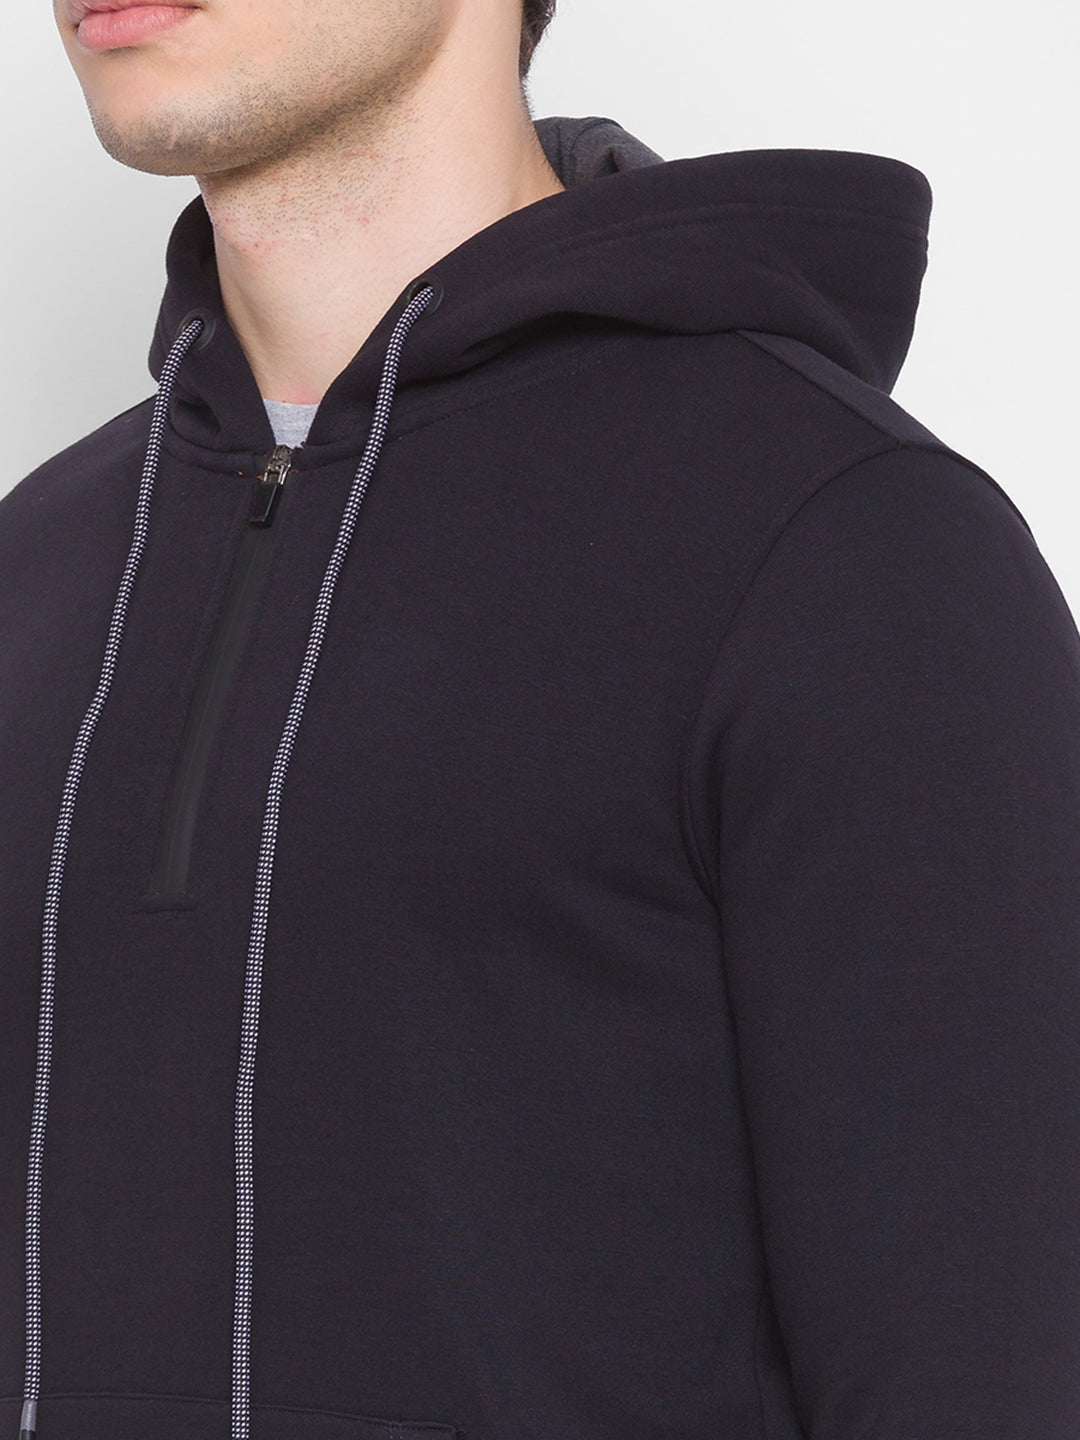 Spykar Black Cotton Sweatshirt For Men